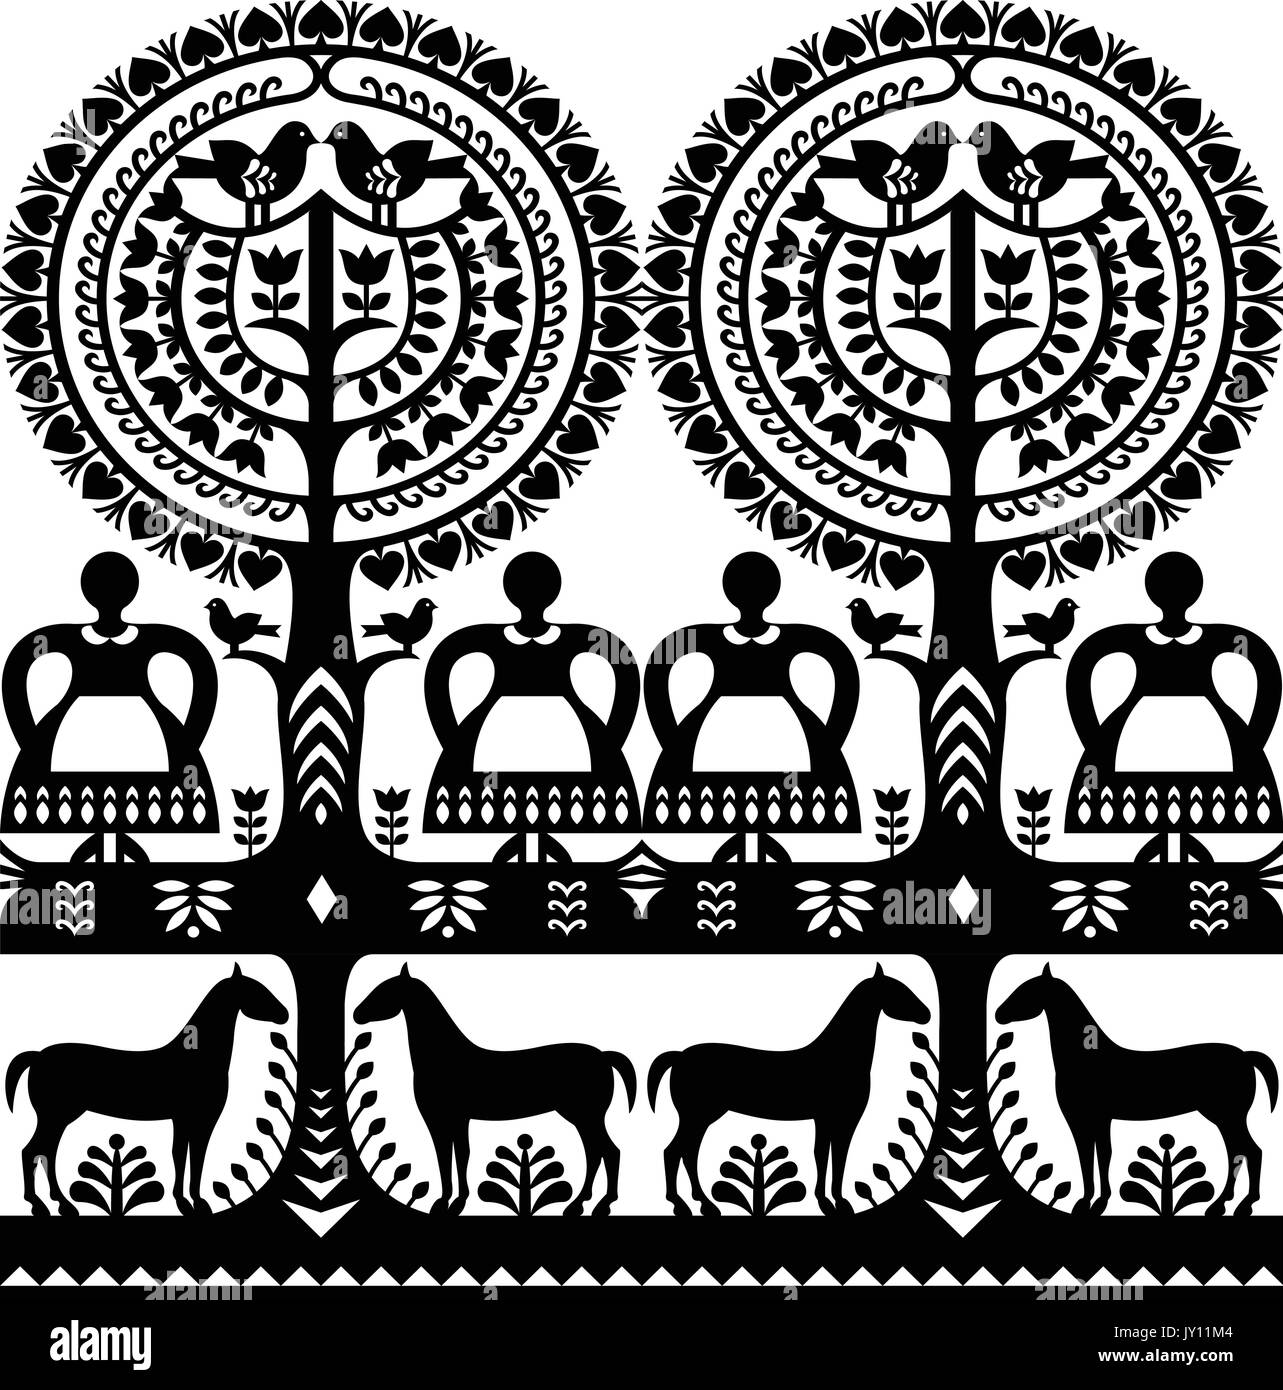 Seamless Polish folk art pattern Wycinanki Kurpiowskie - Kurpie Papercuts   Vector repetitive folk design from the region of Kurpie in Poland with wom Stock Vector